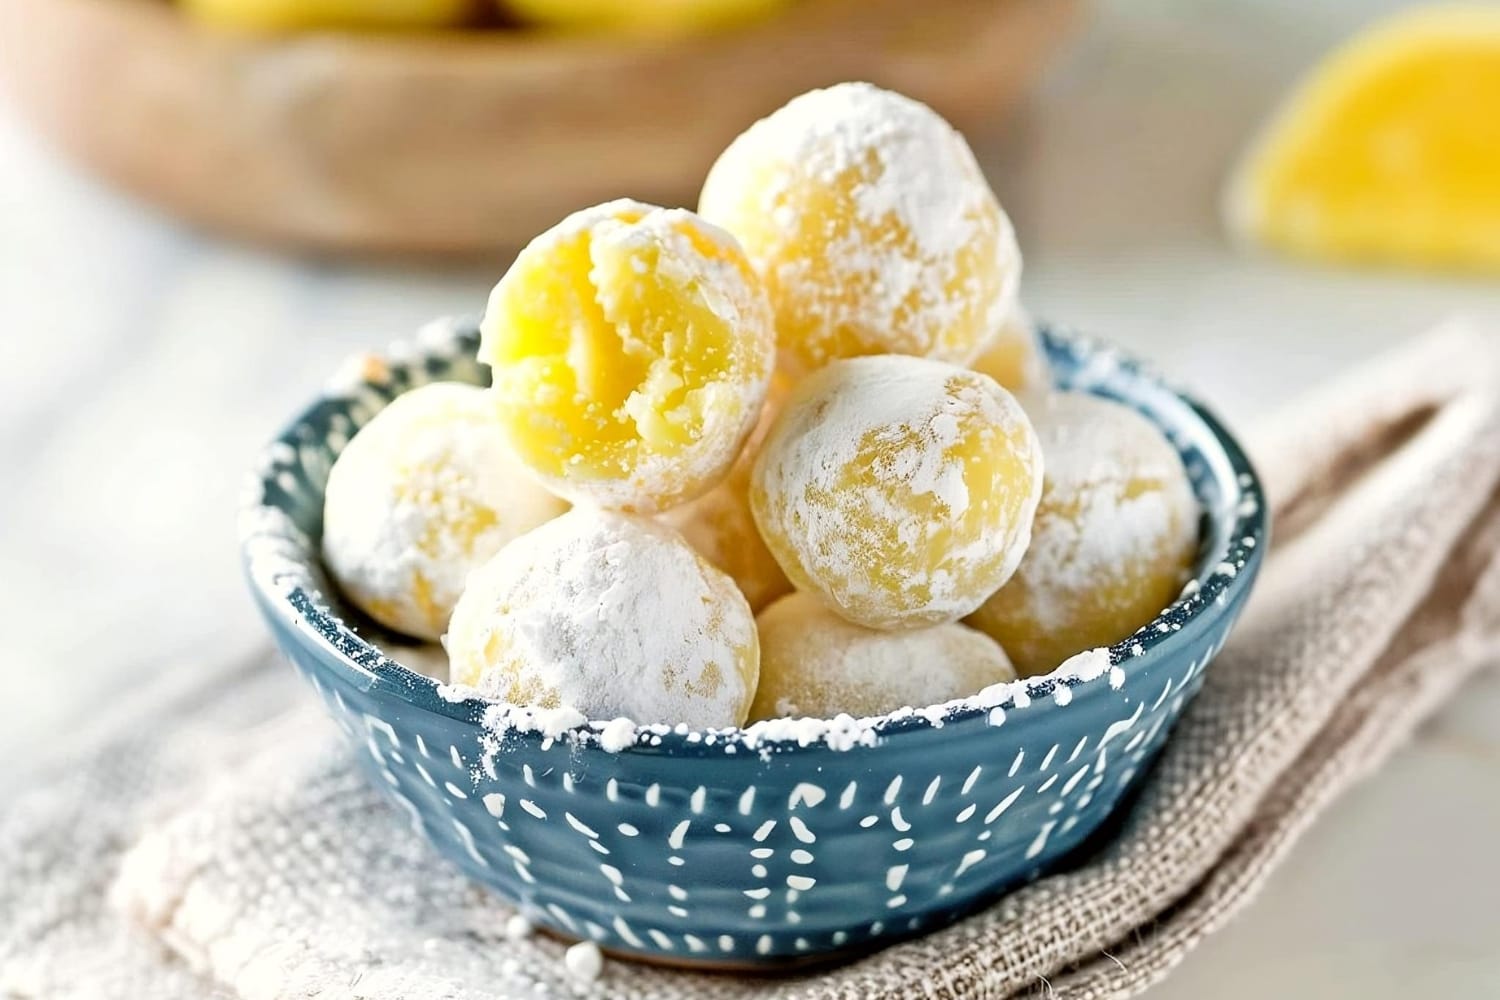 White chocolate lemon truffles with sweet and creamy ganache filling